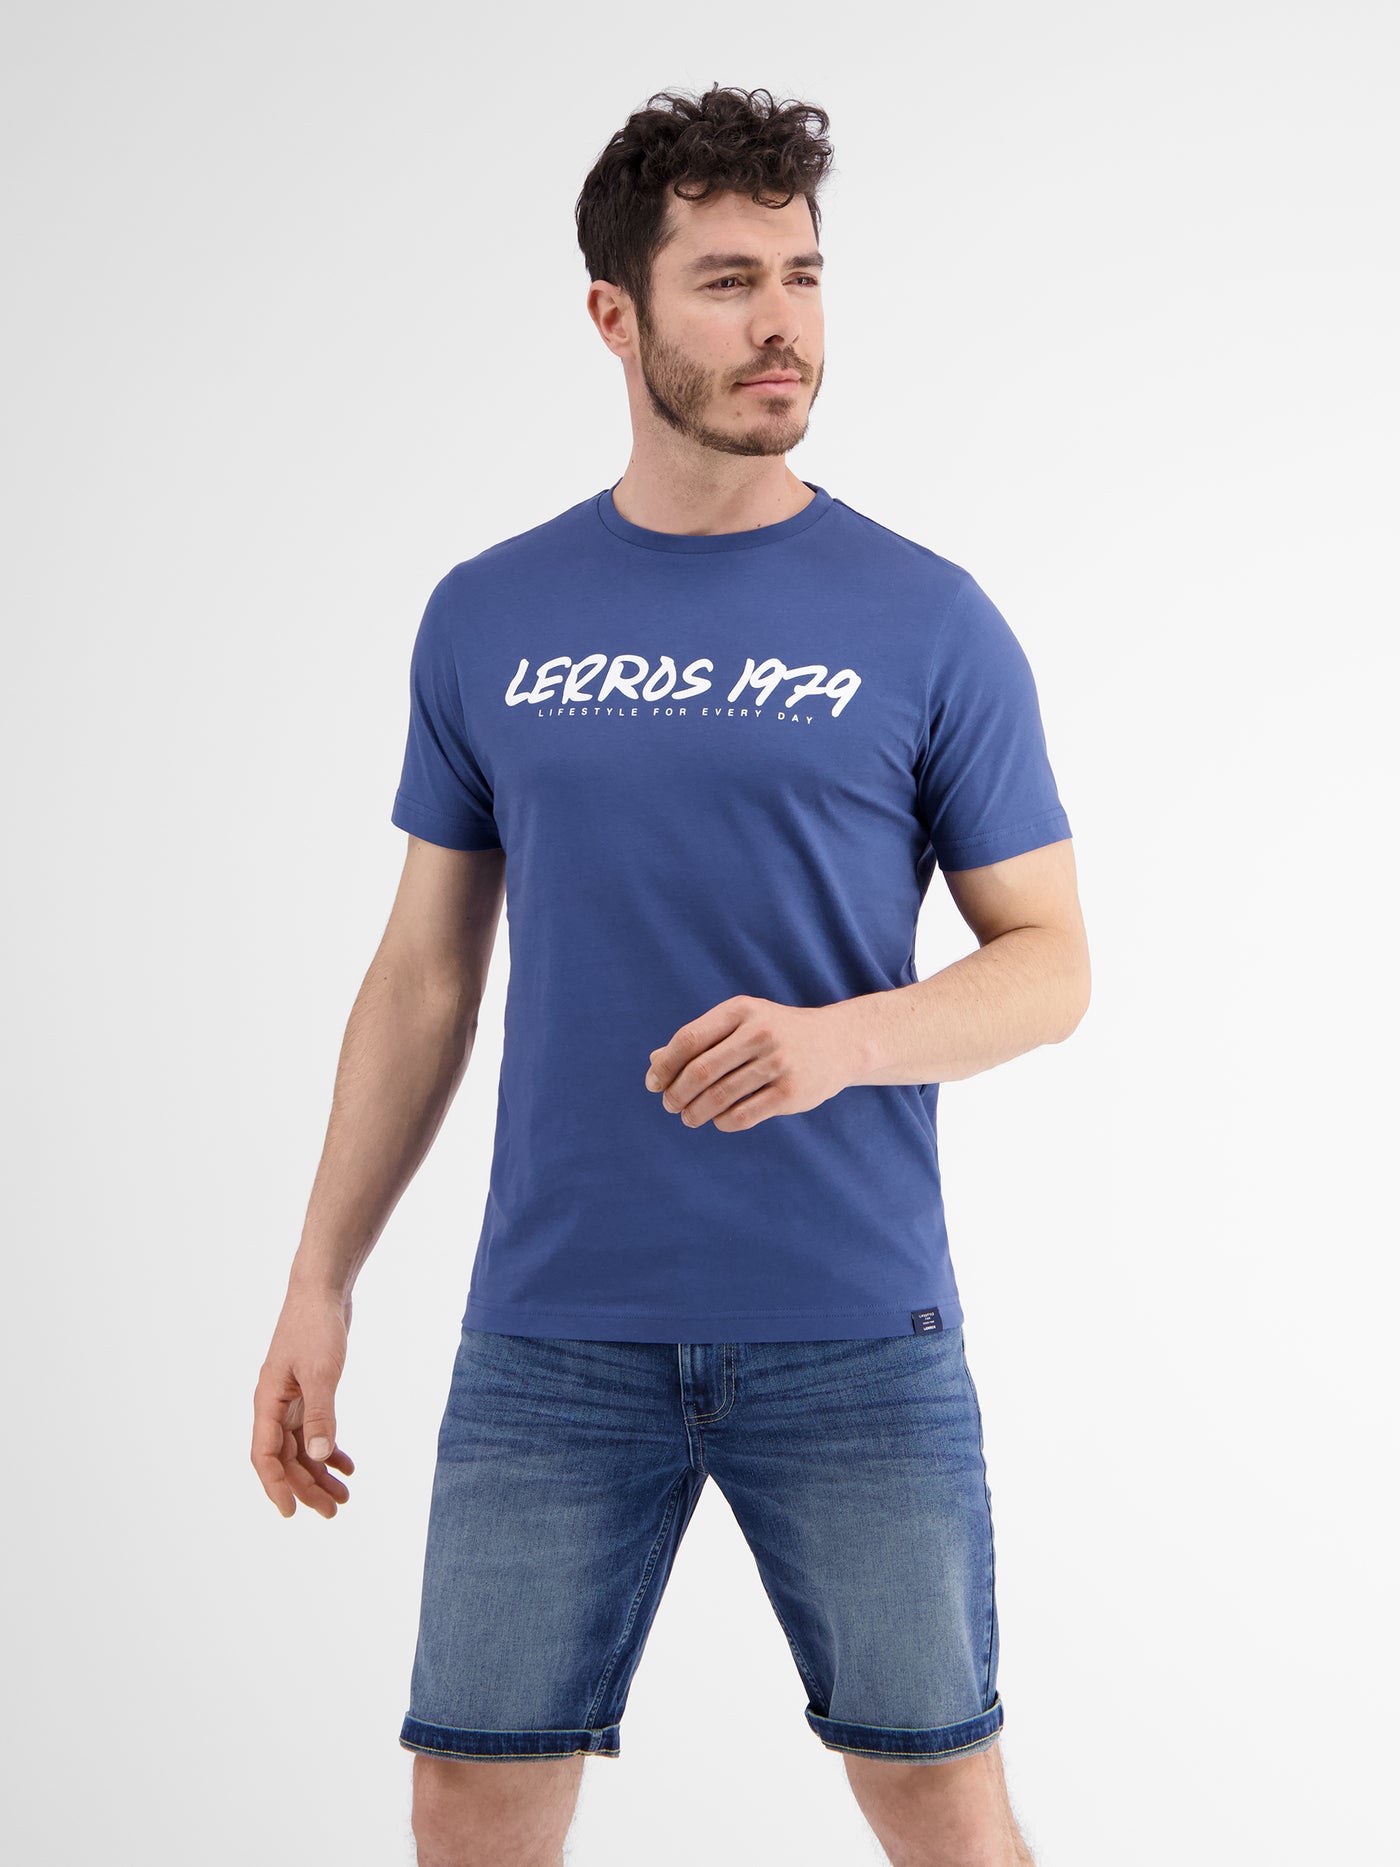 LERROS 1979* – SHOP T-Shirt *LERROS